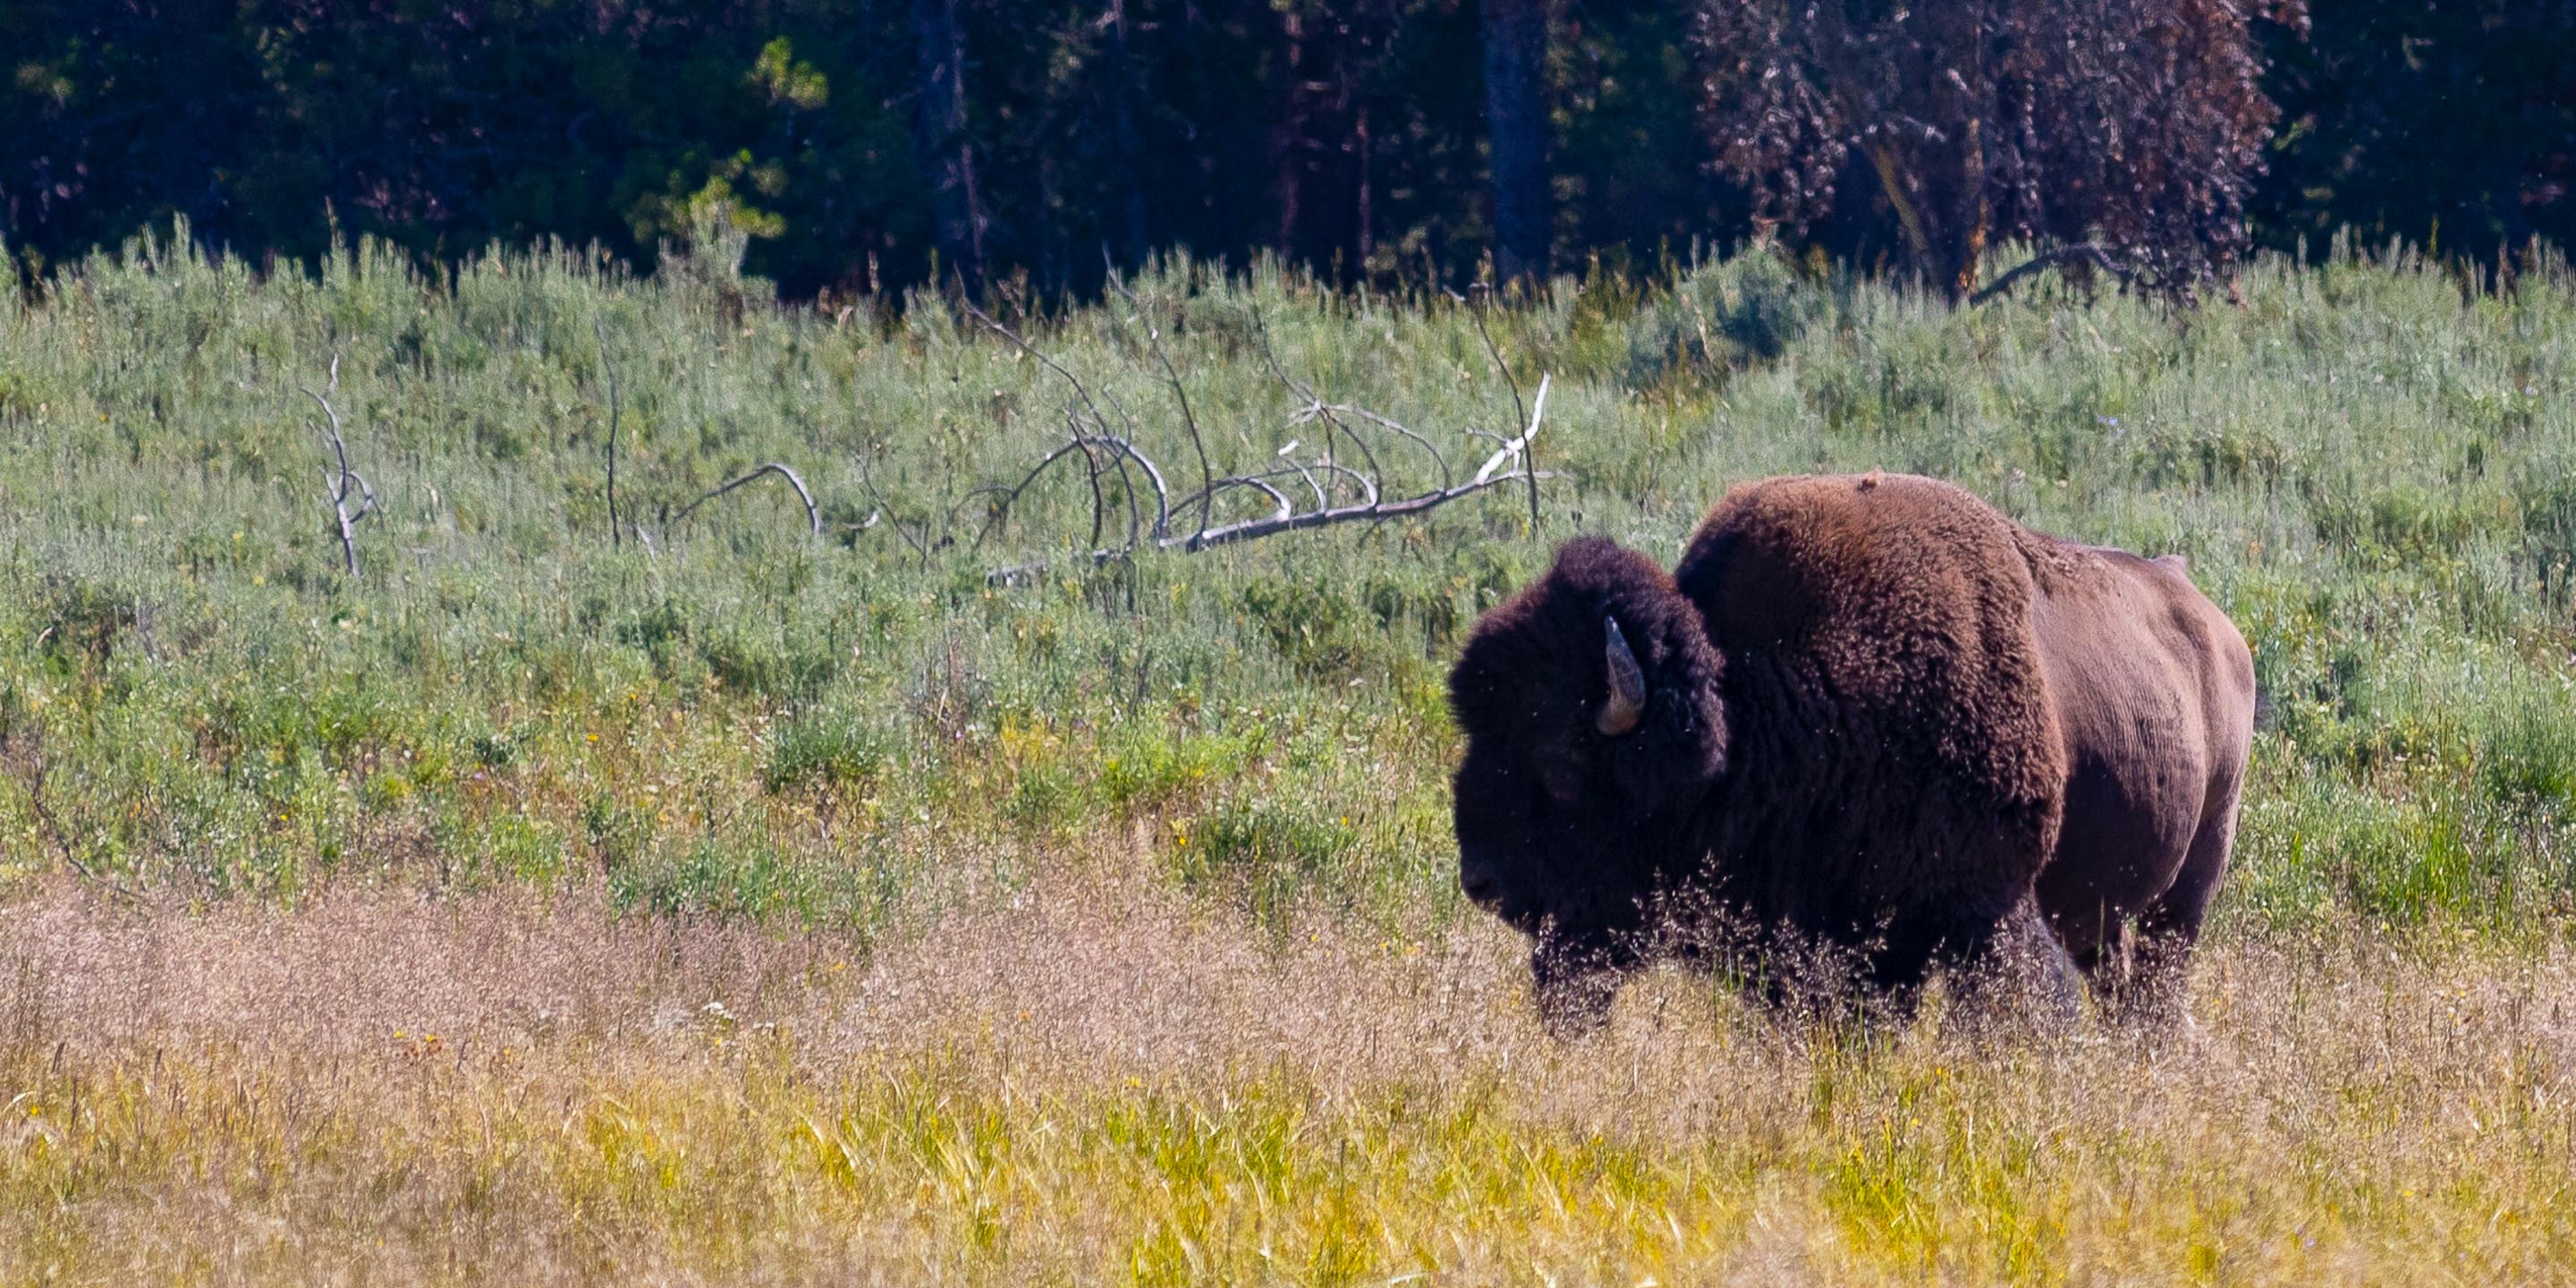 A buffalo walks slowly through a field in Yellowstone National Park.